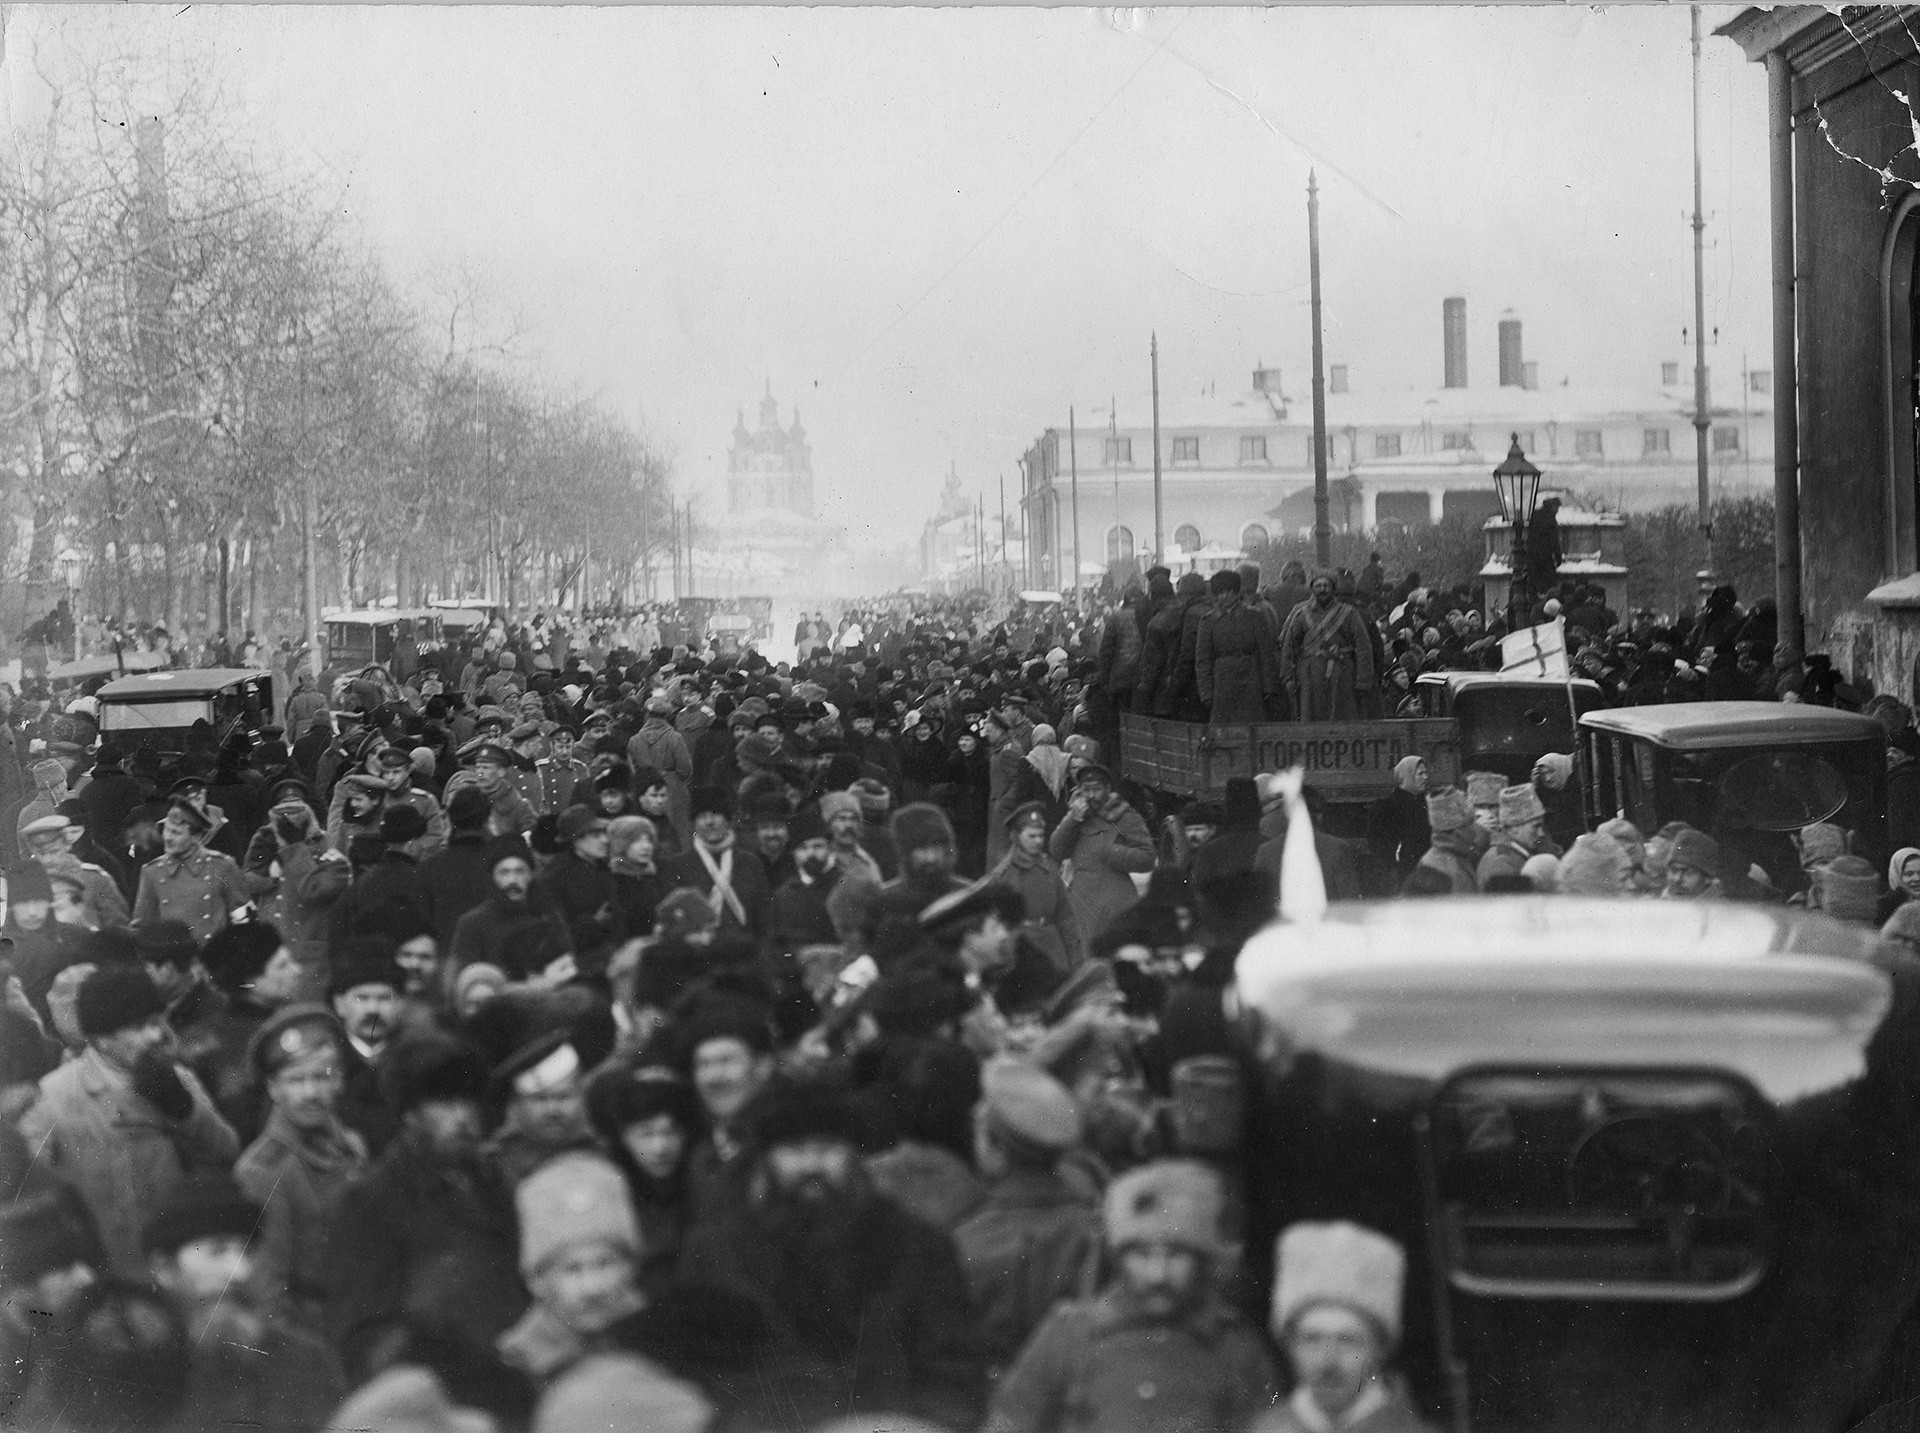 Revolutionary Petrograd (former name of St. Petersburg) in 1918.